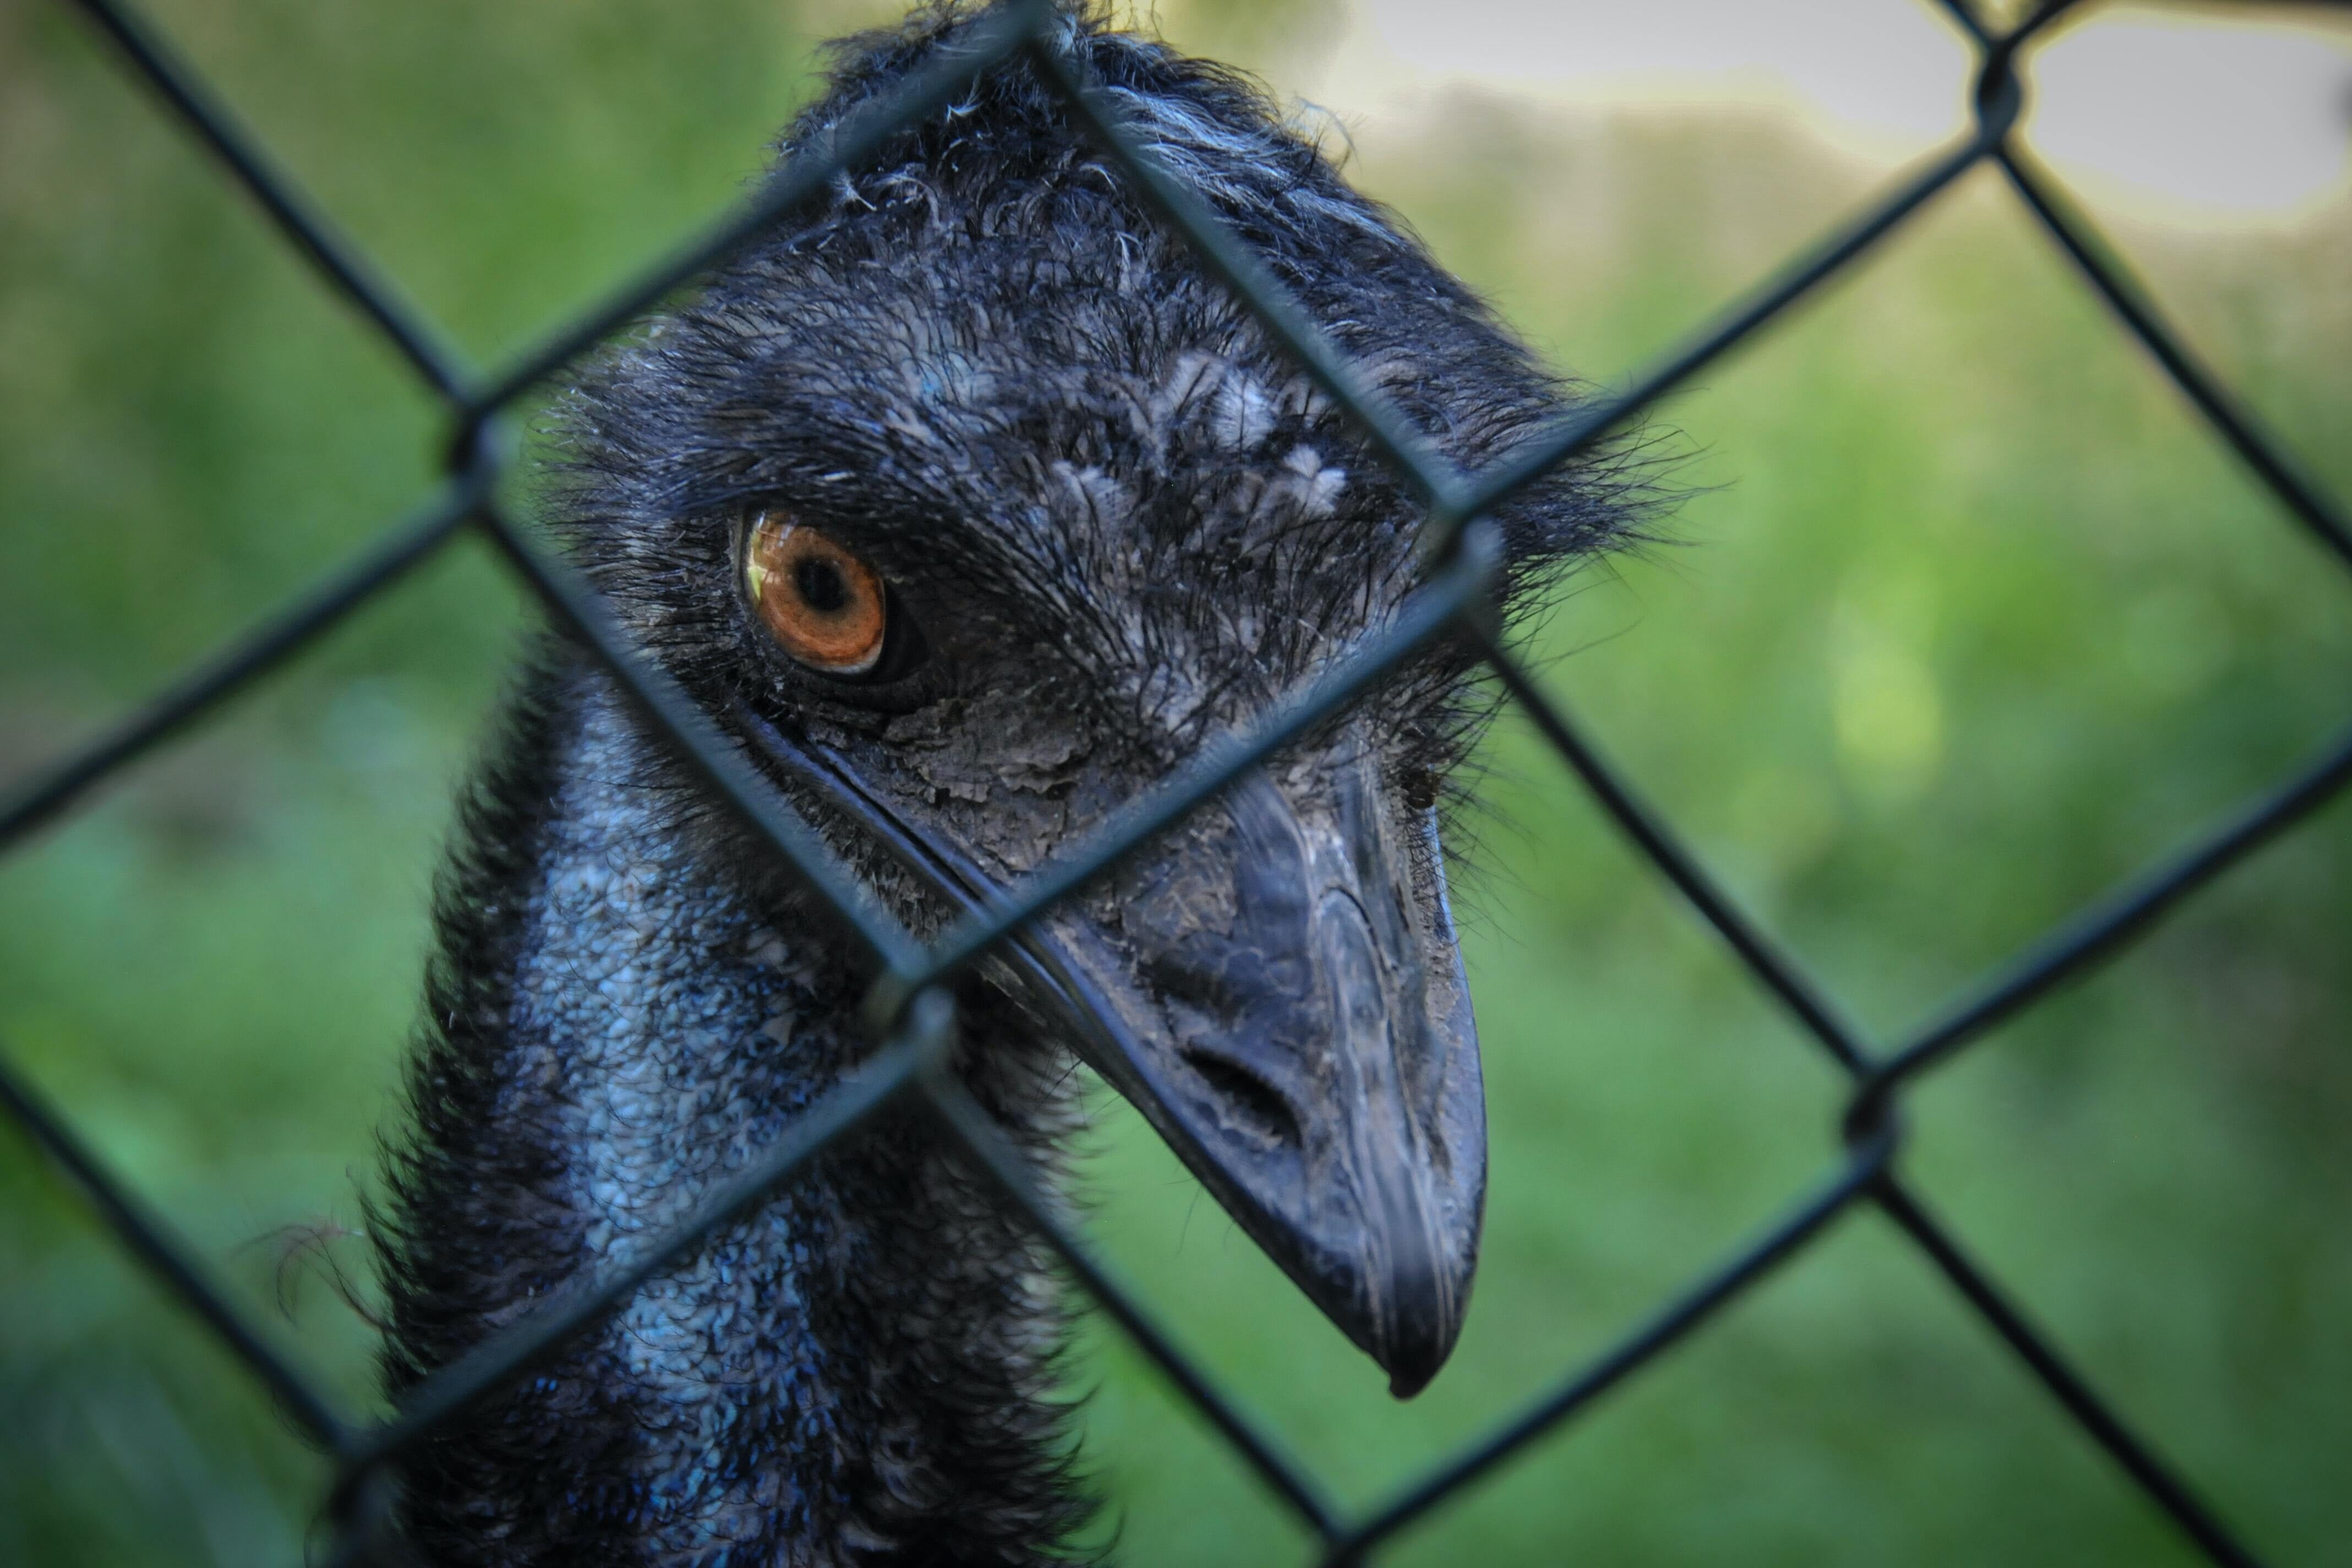 An emu behind a mesh